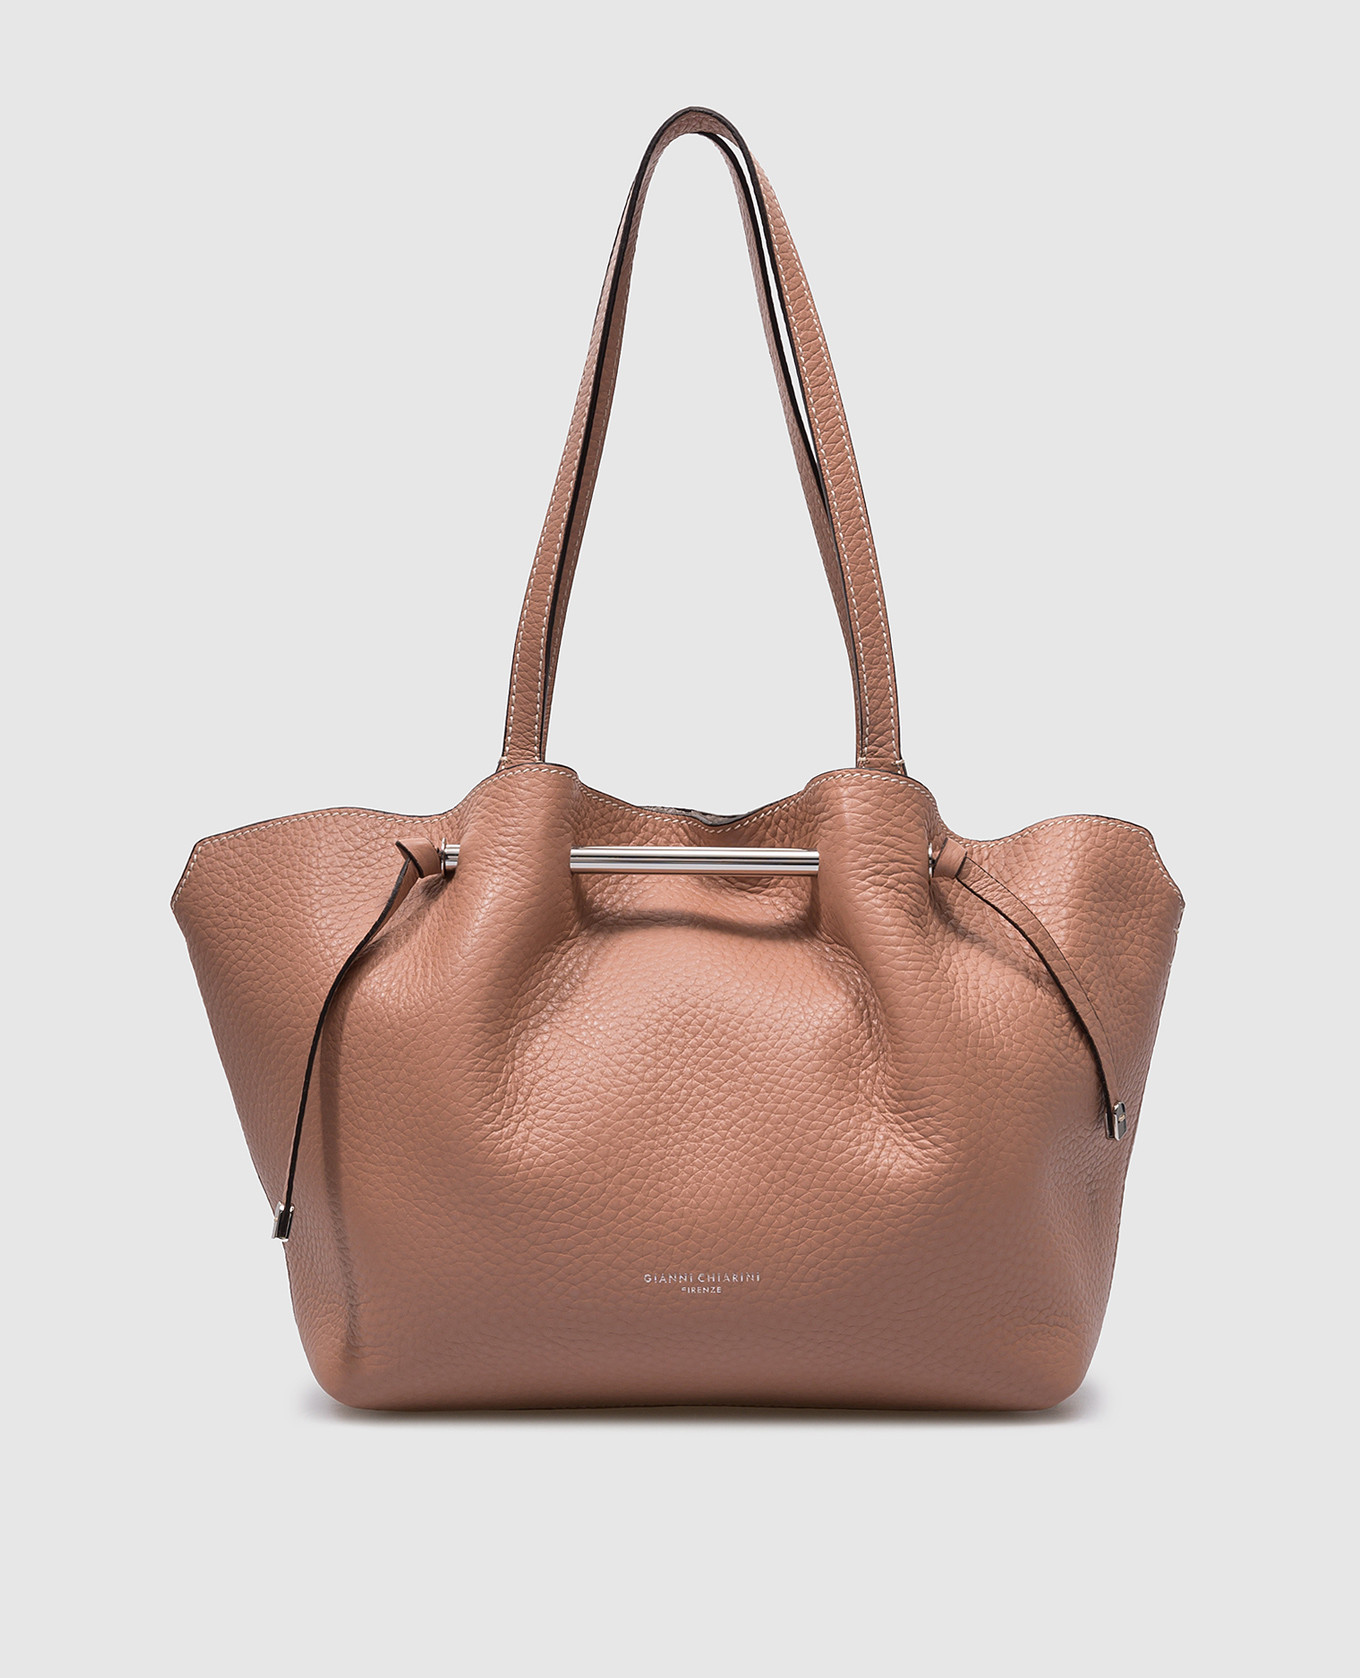 AMANDA brown leather tote bag with logo print